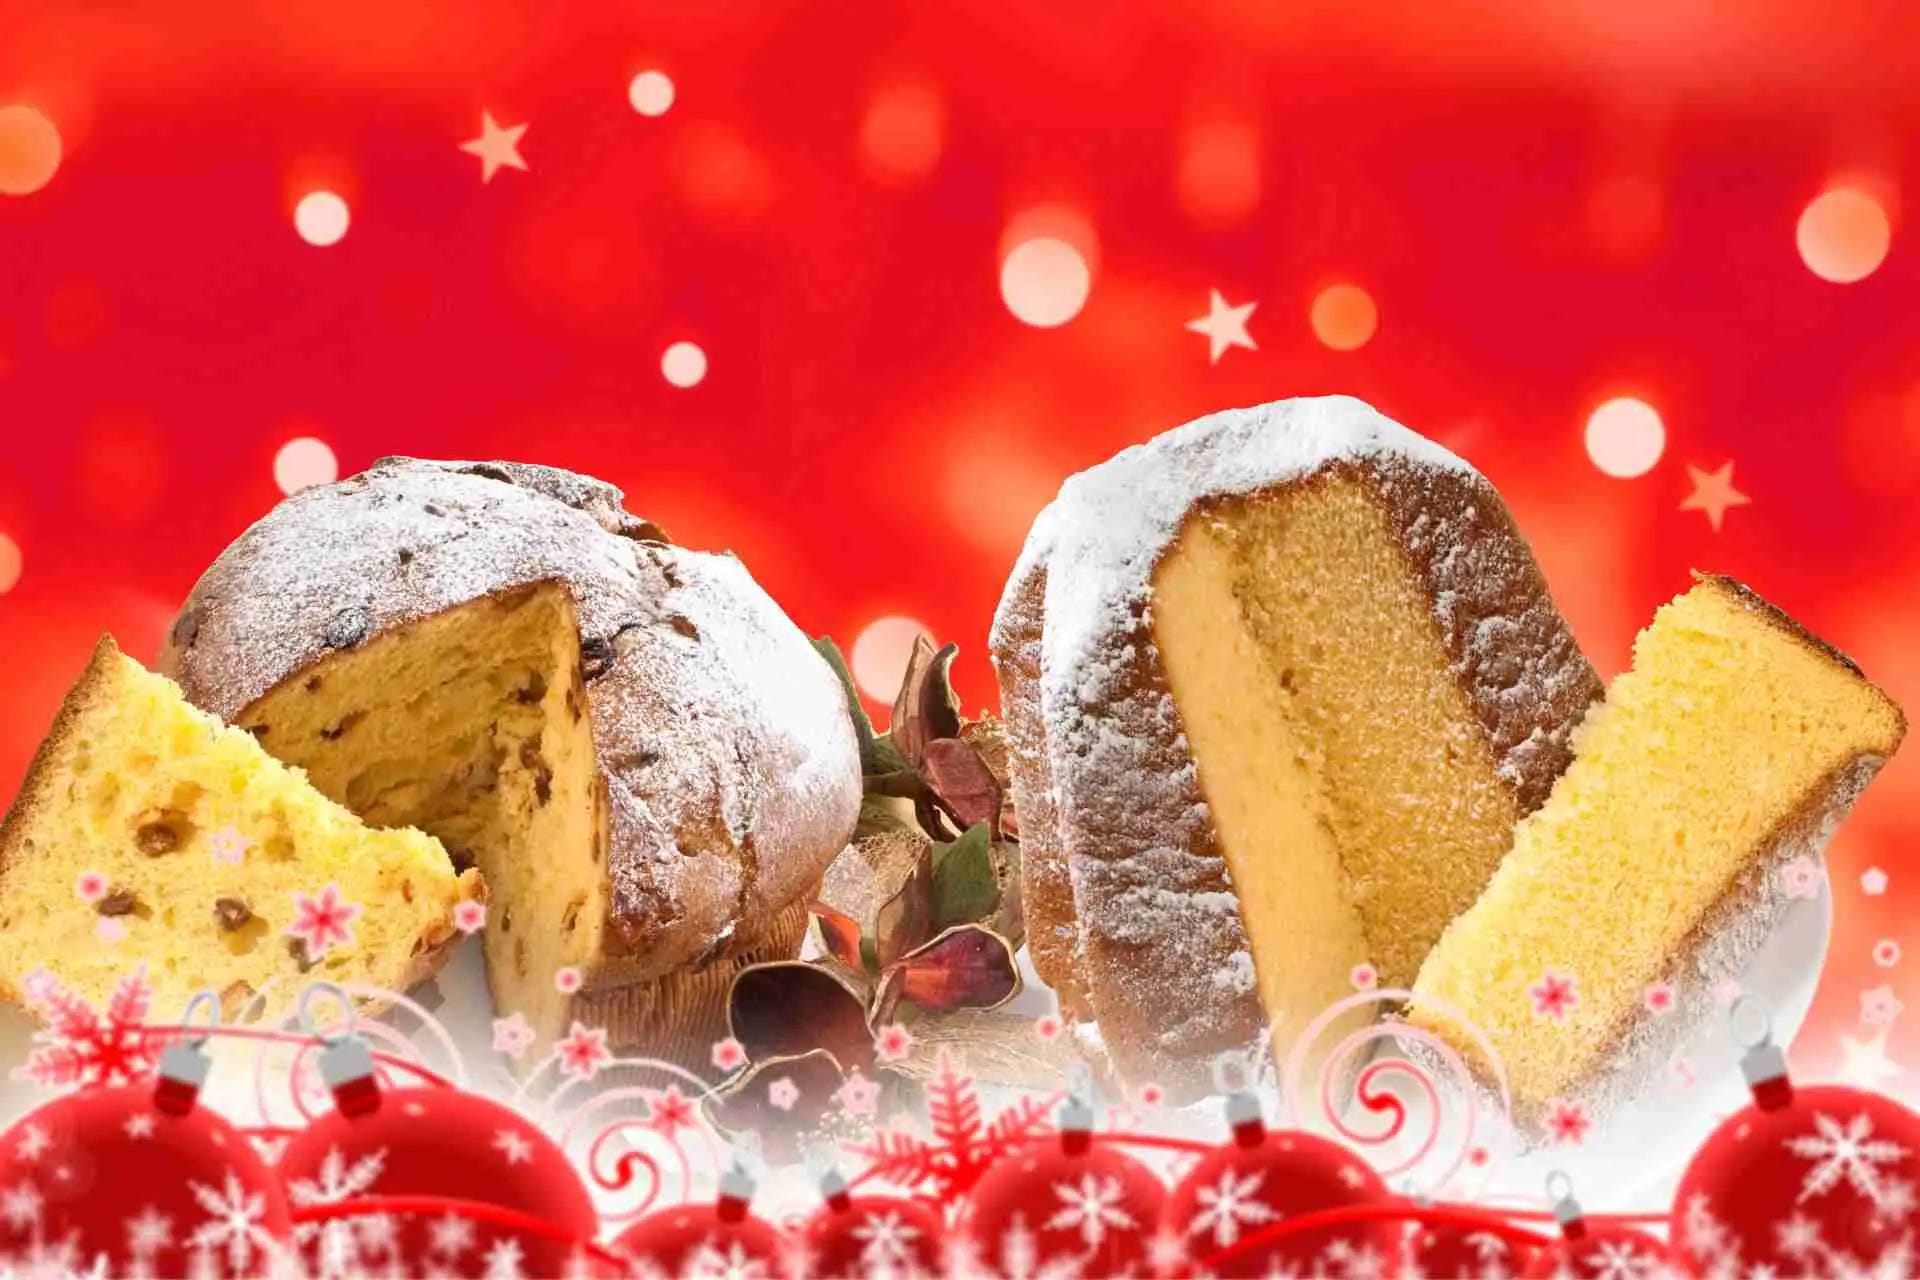 Christmas Cakes: Italian panettone and pandoro